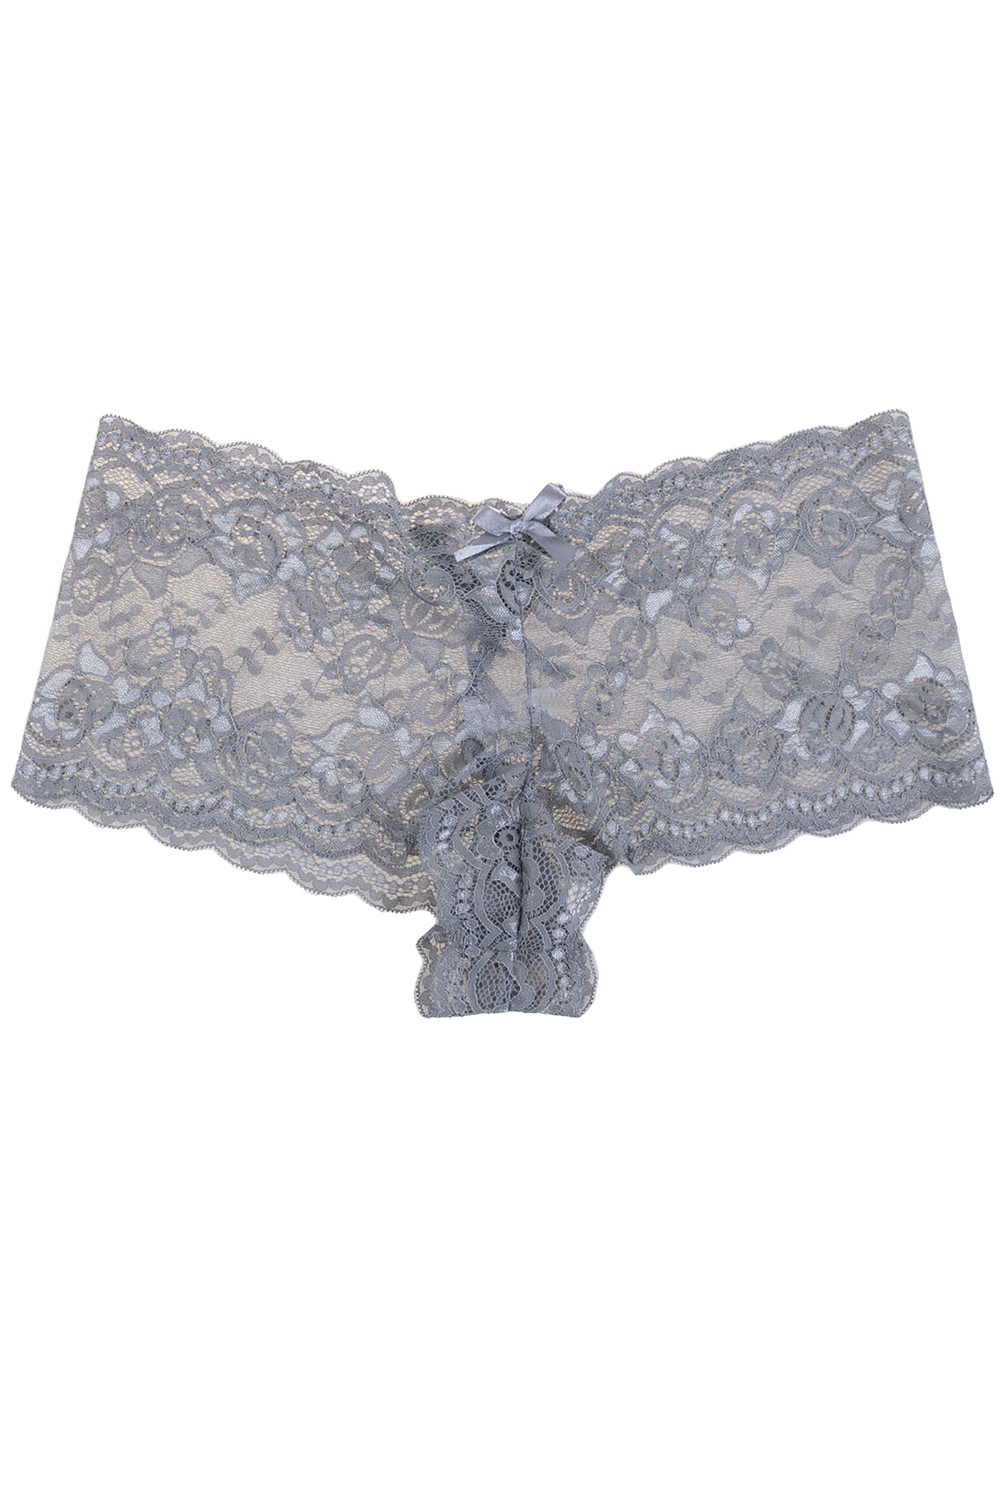 Softrhyme Push up bra for Women Demi Cup Underwear lace Hollow out Sexy  Lingerie plus size 38C 40C 42C 44 C